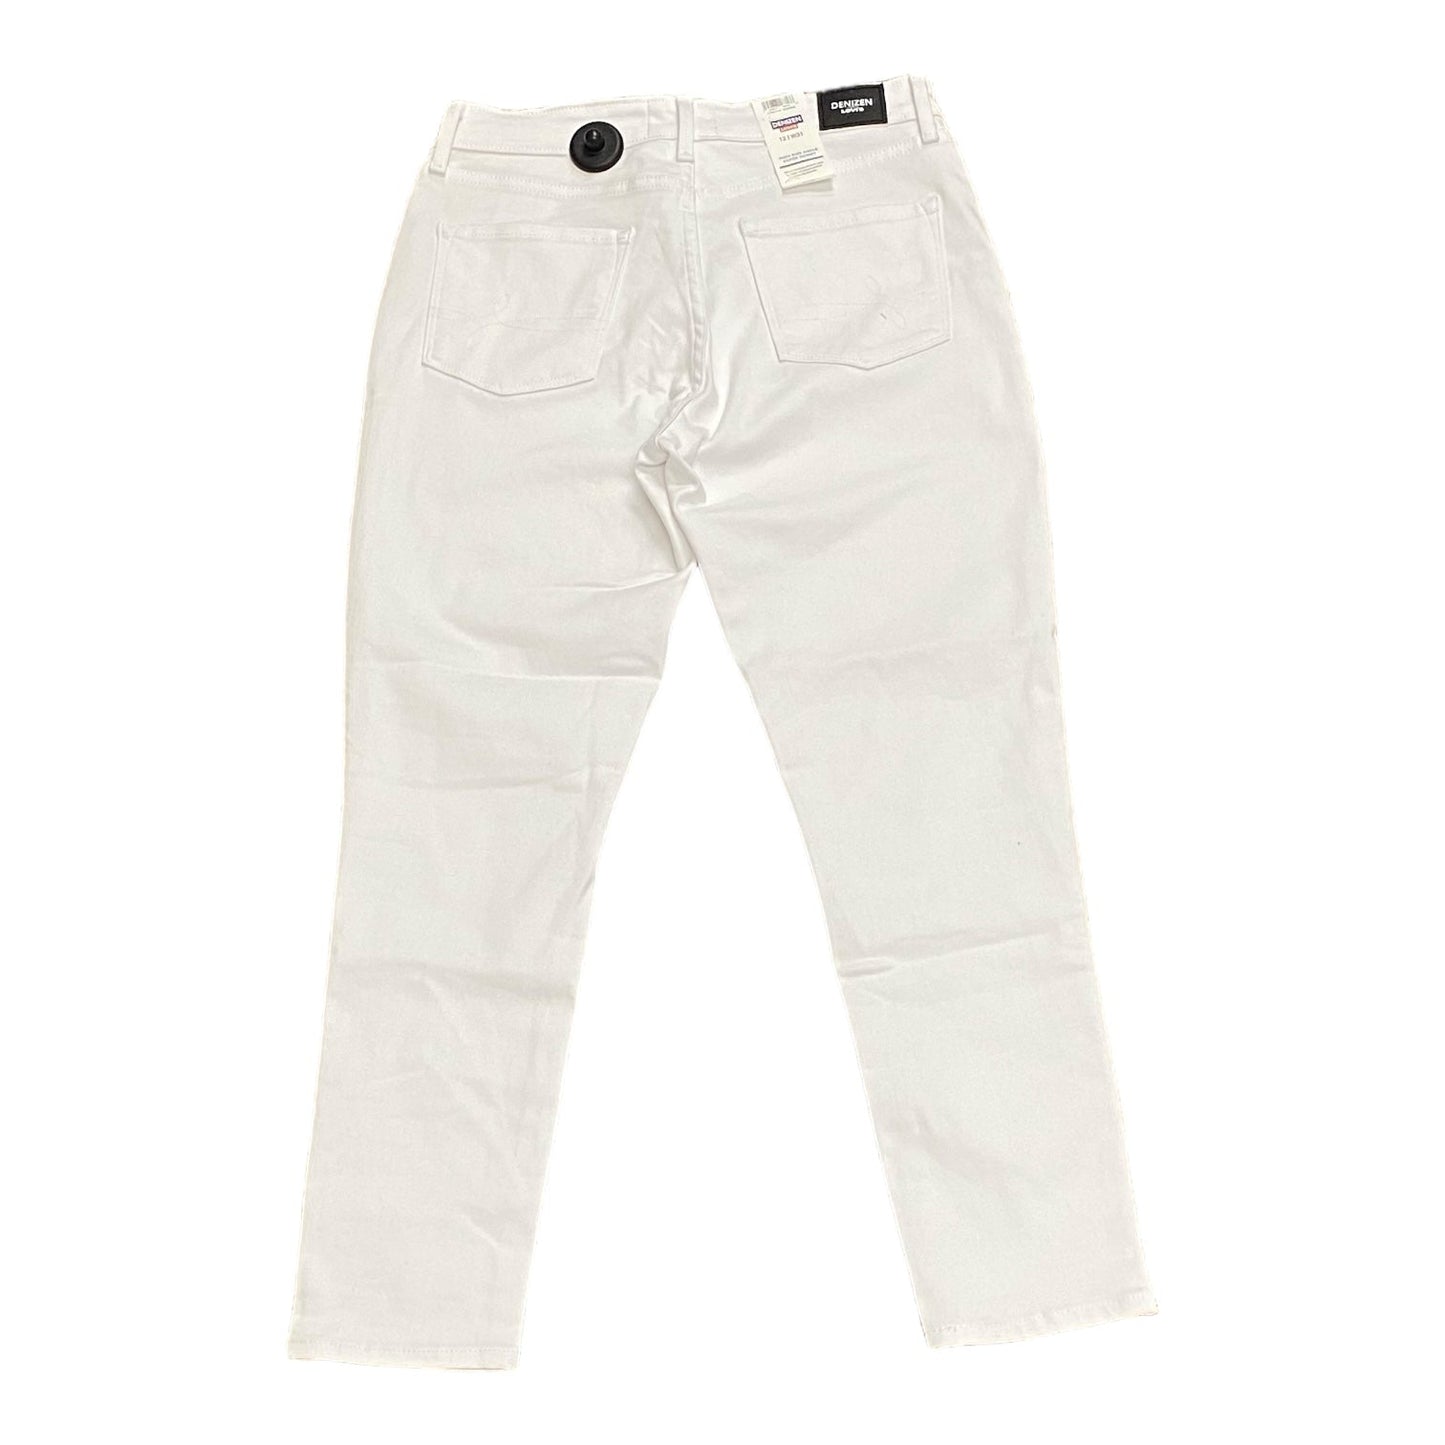 White Denim Jeans Skinny Denizen By Levis, Size 12